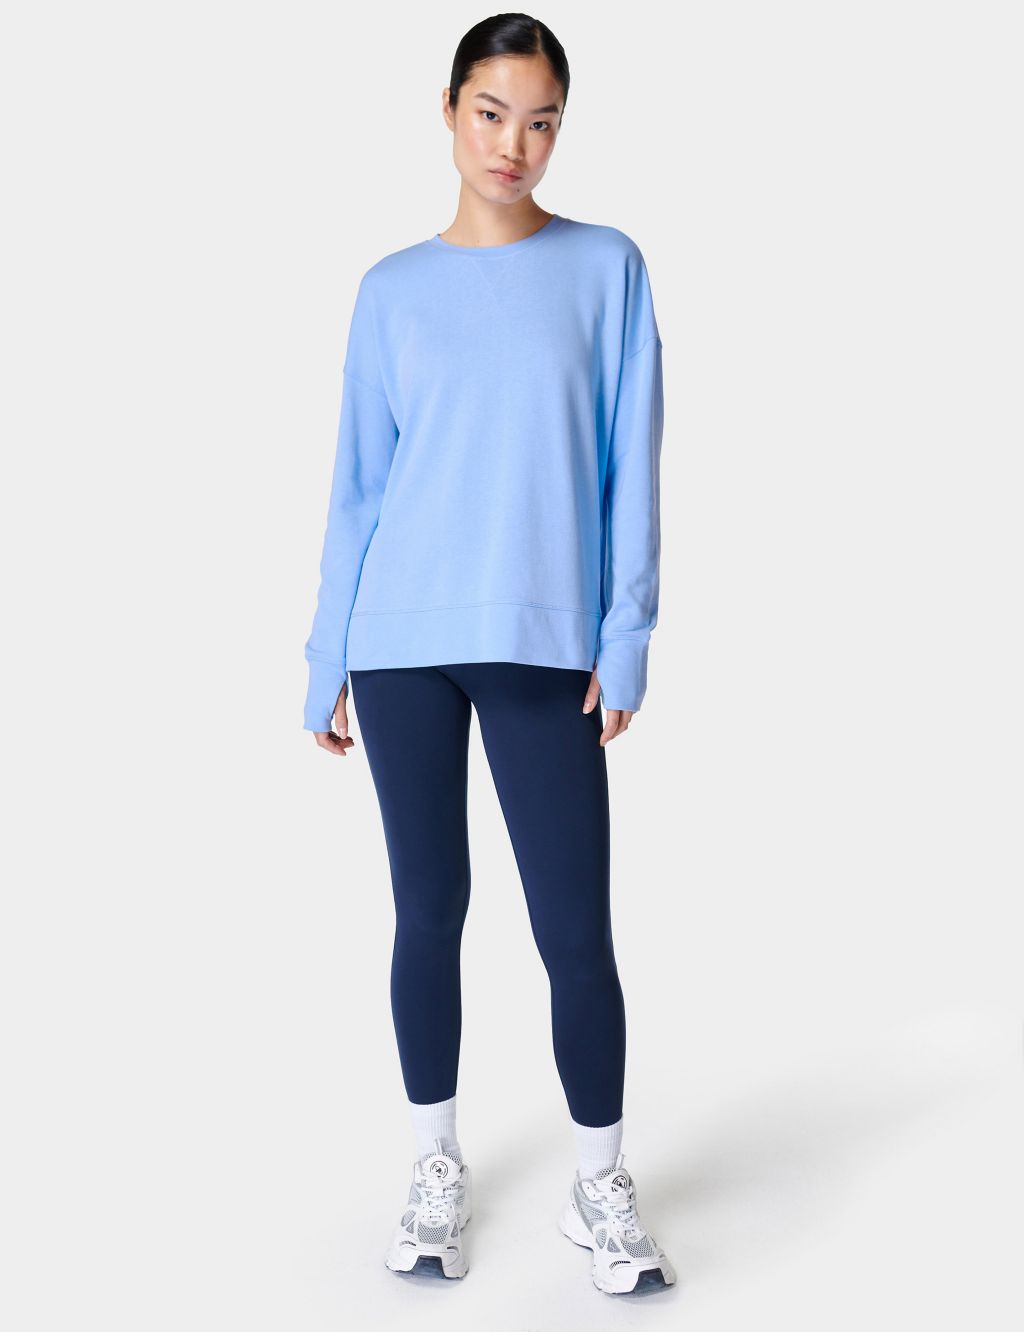 After Class Cotton Blend Longline Sweatshirt image 2